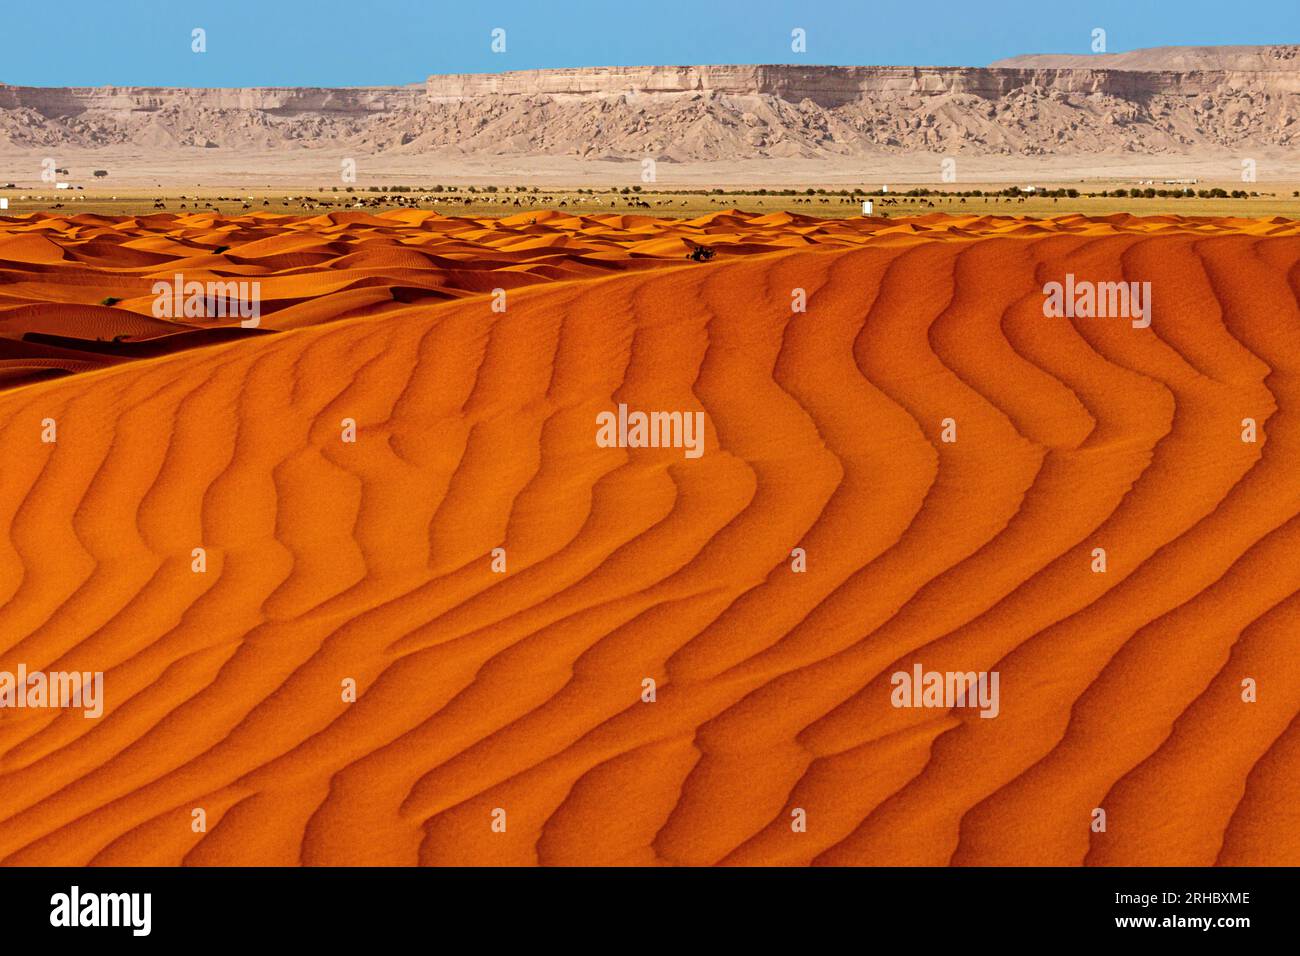 Orange sand dunes in desert landscape, Saudi Arabia Stock Photo